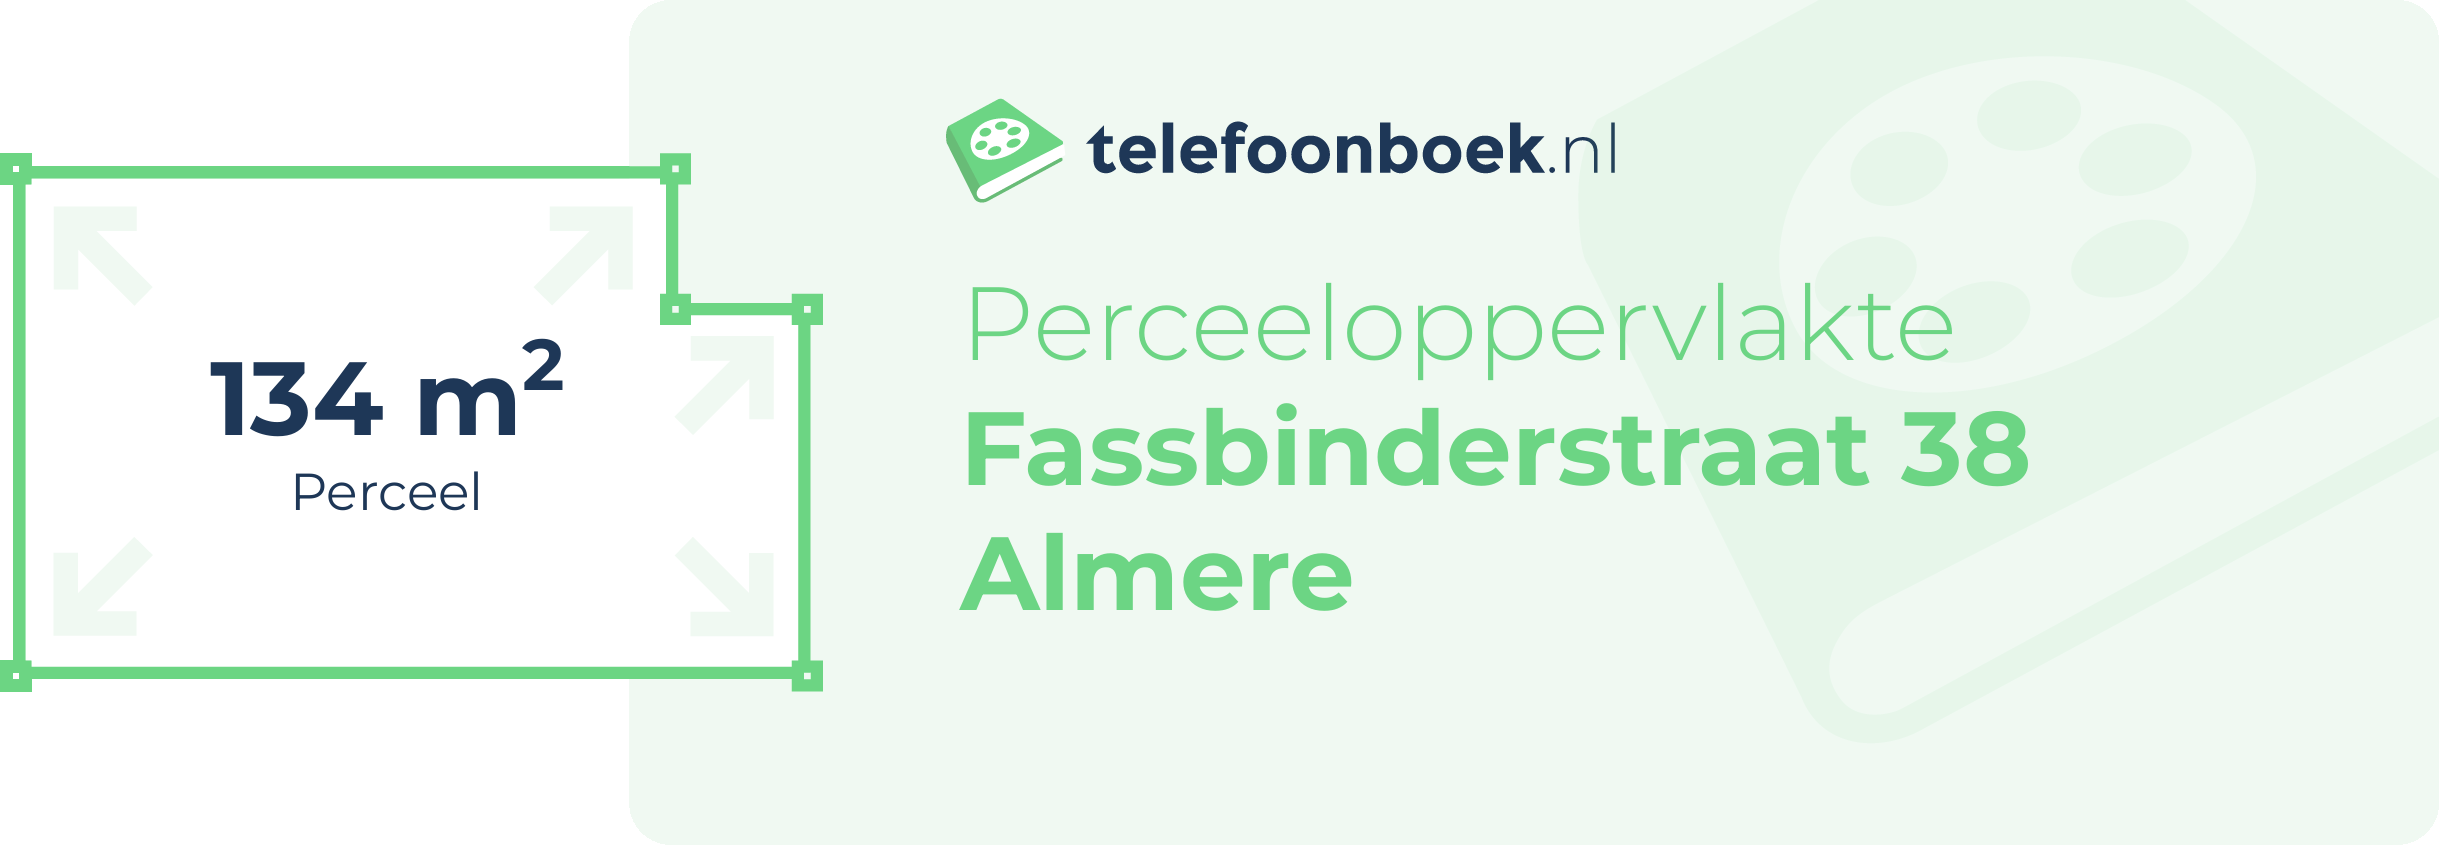 Perceeloppervlakte Fassbinderstraat 38 Almere